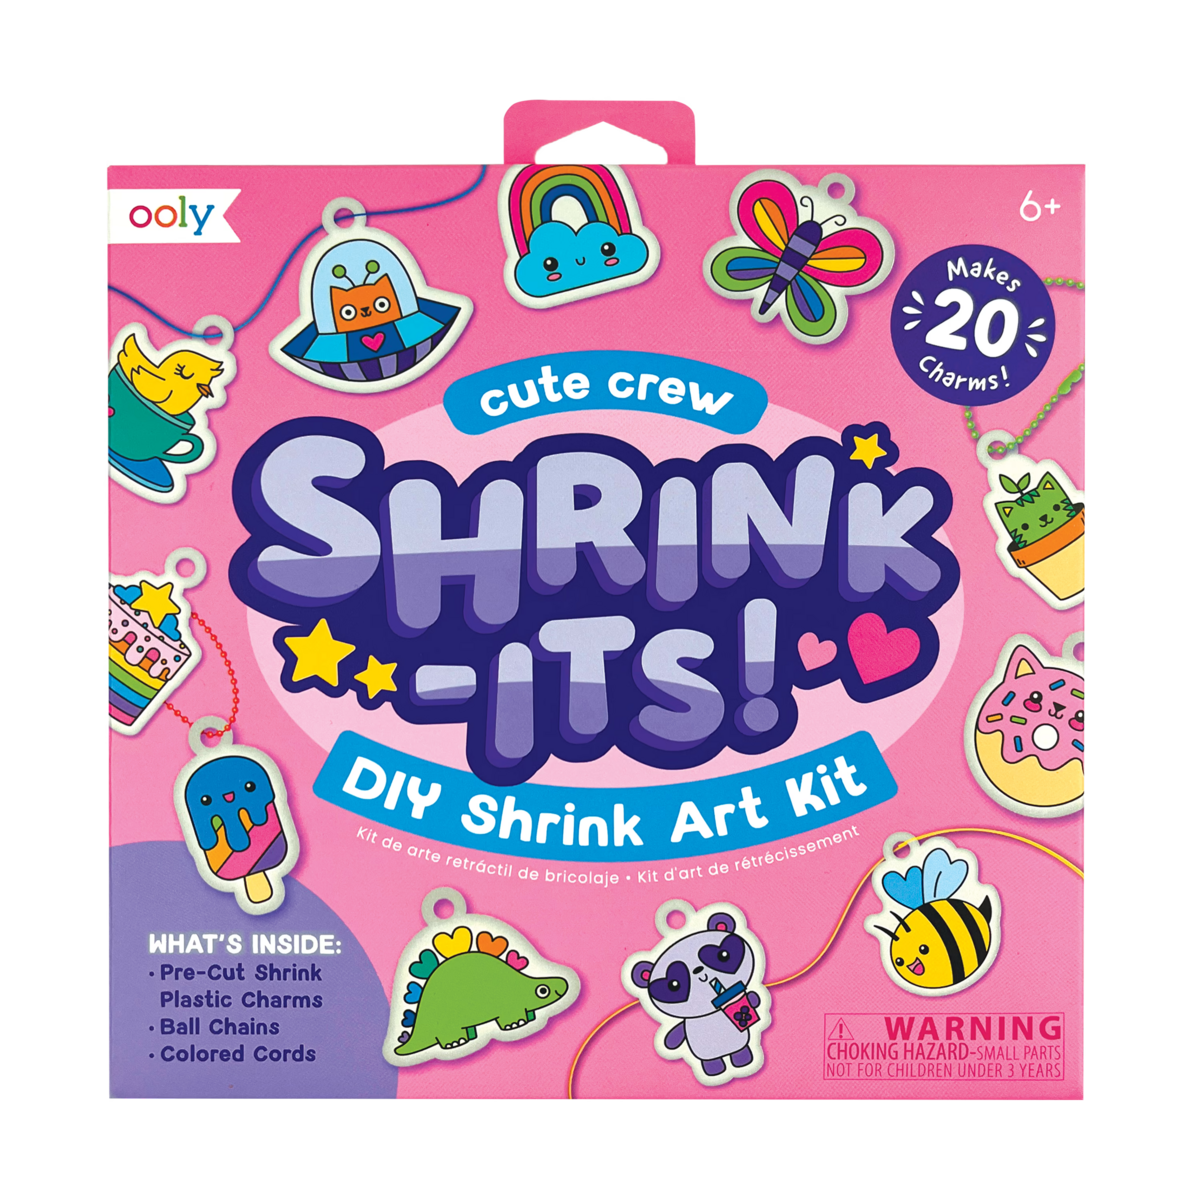 Shrink-its! DIY Shrink Art Kit - Cute Crew front of packaging